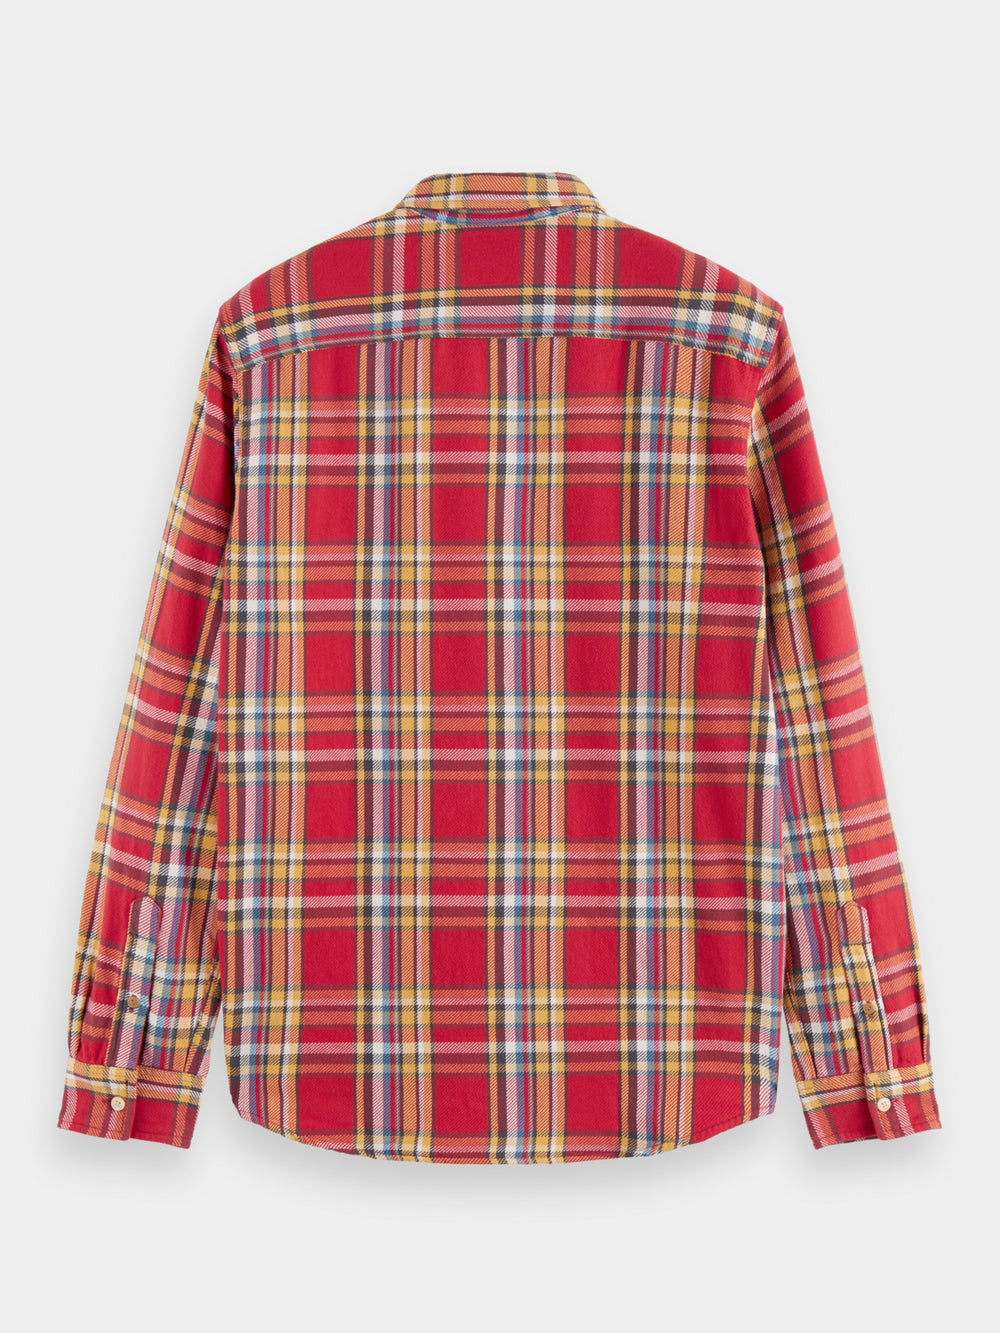 Flannel check shirt - Scotch & Soda NZ